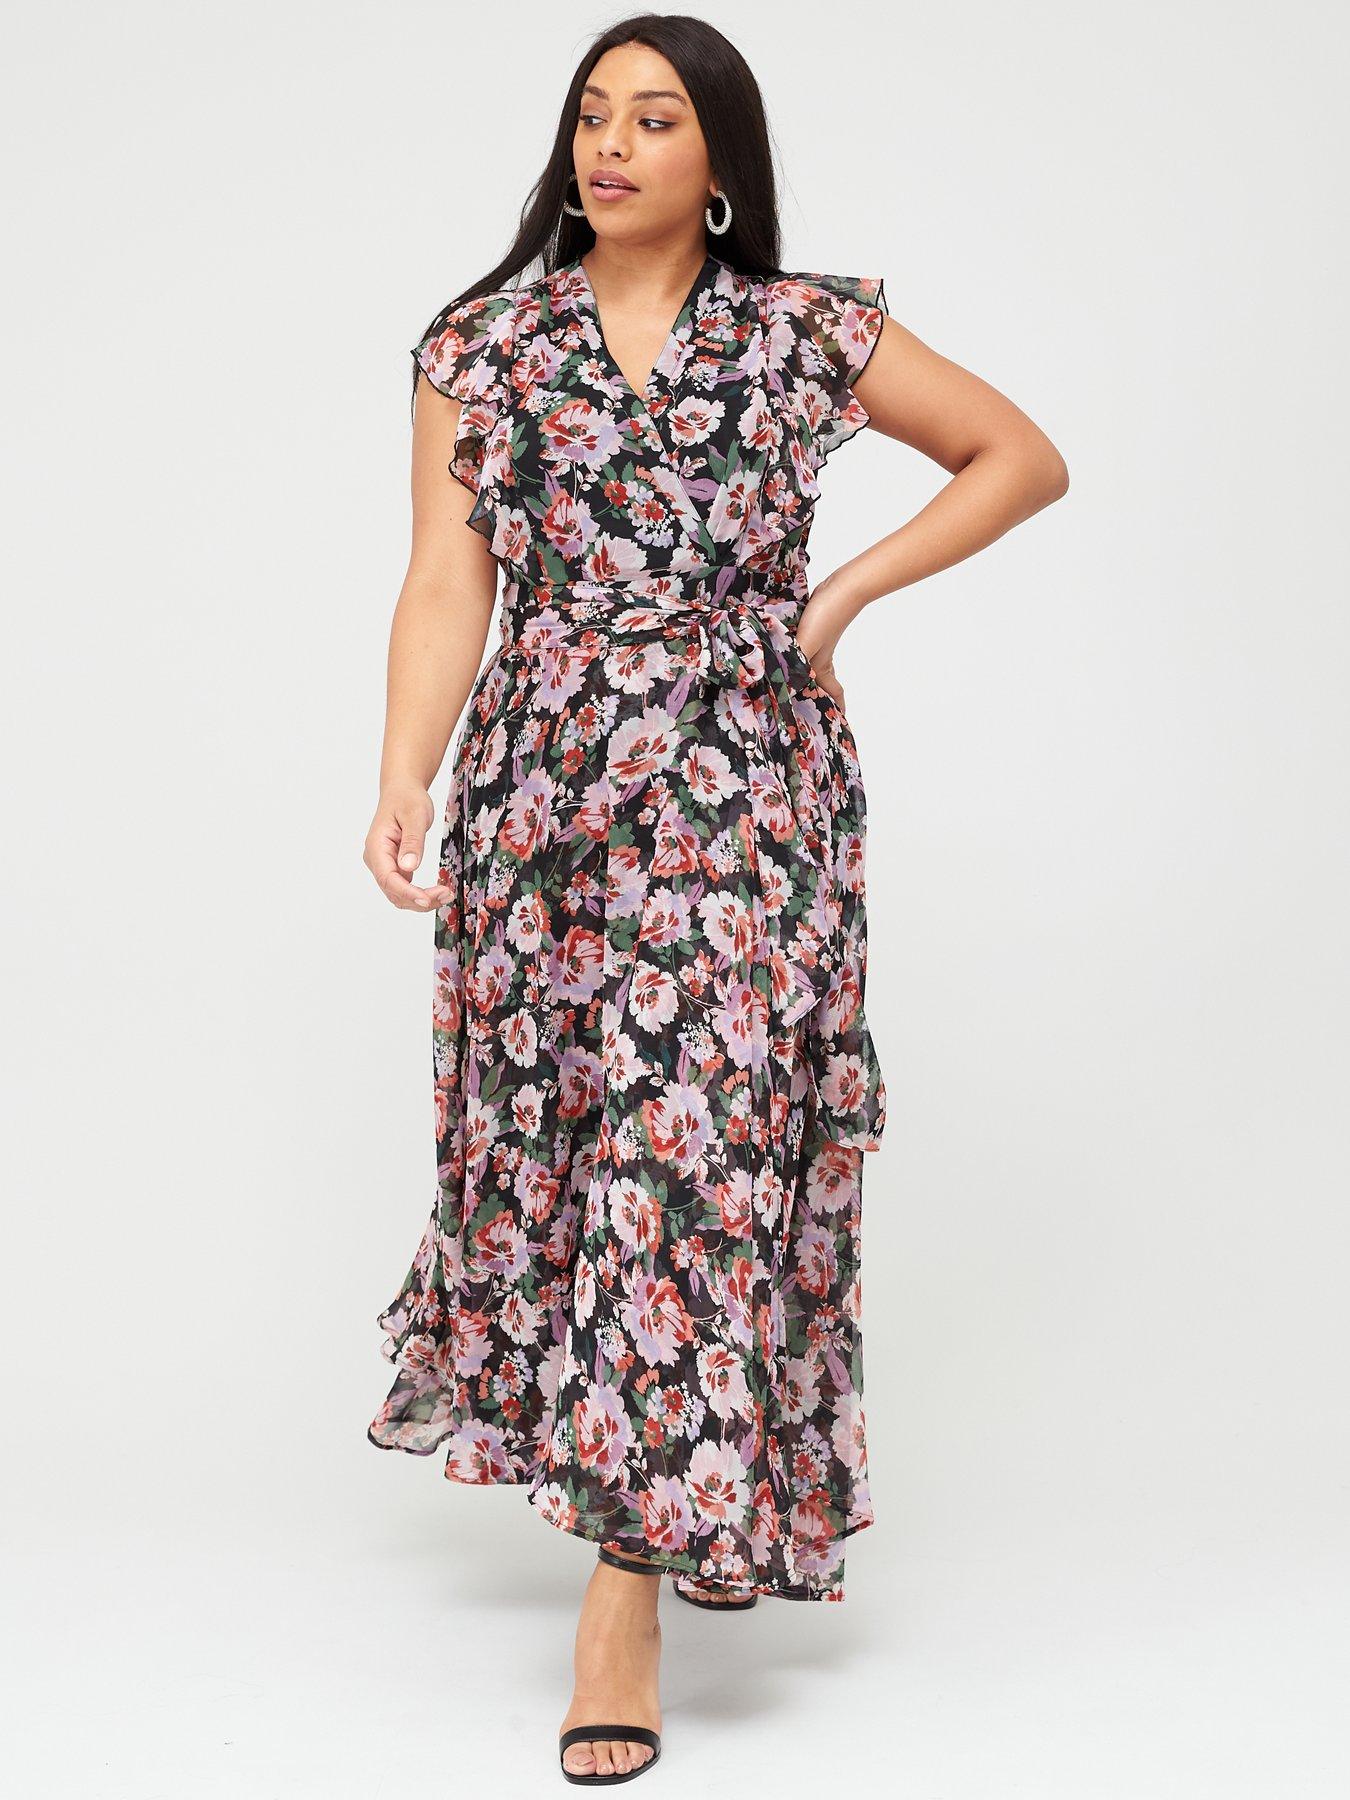 Women Summer V-Neck Floral Print Sleeveess lWrapped Tied Side Long Maxi Dress UK